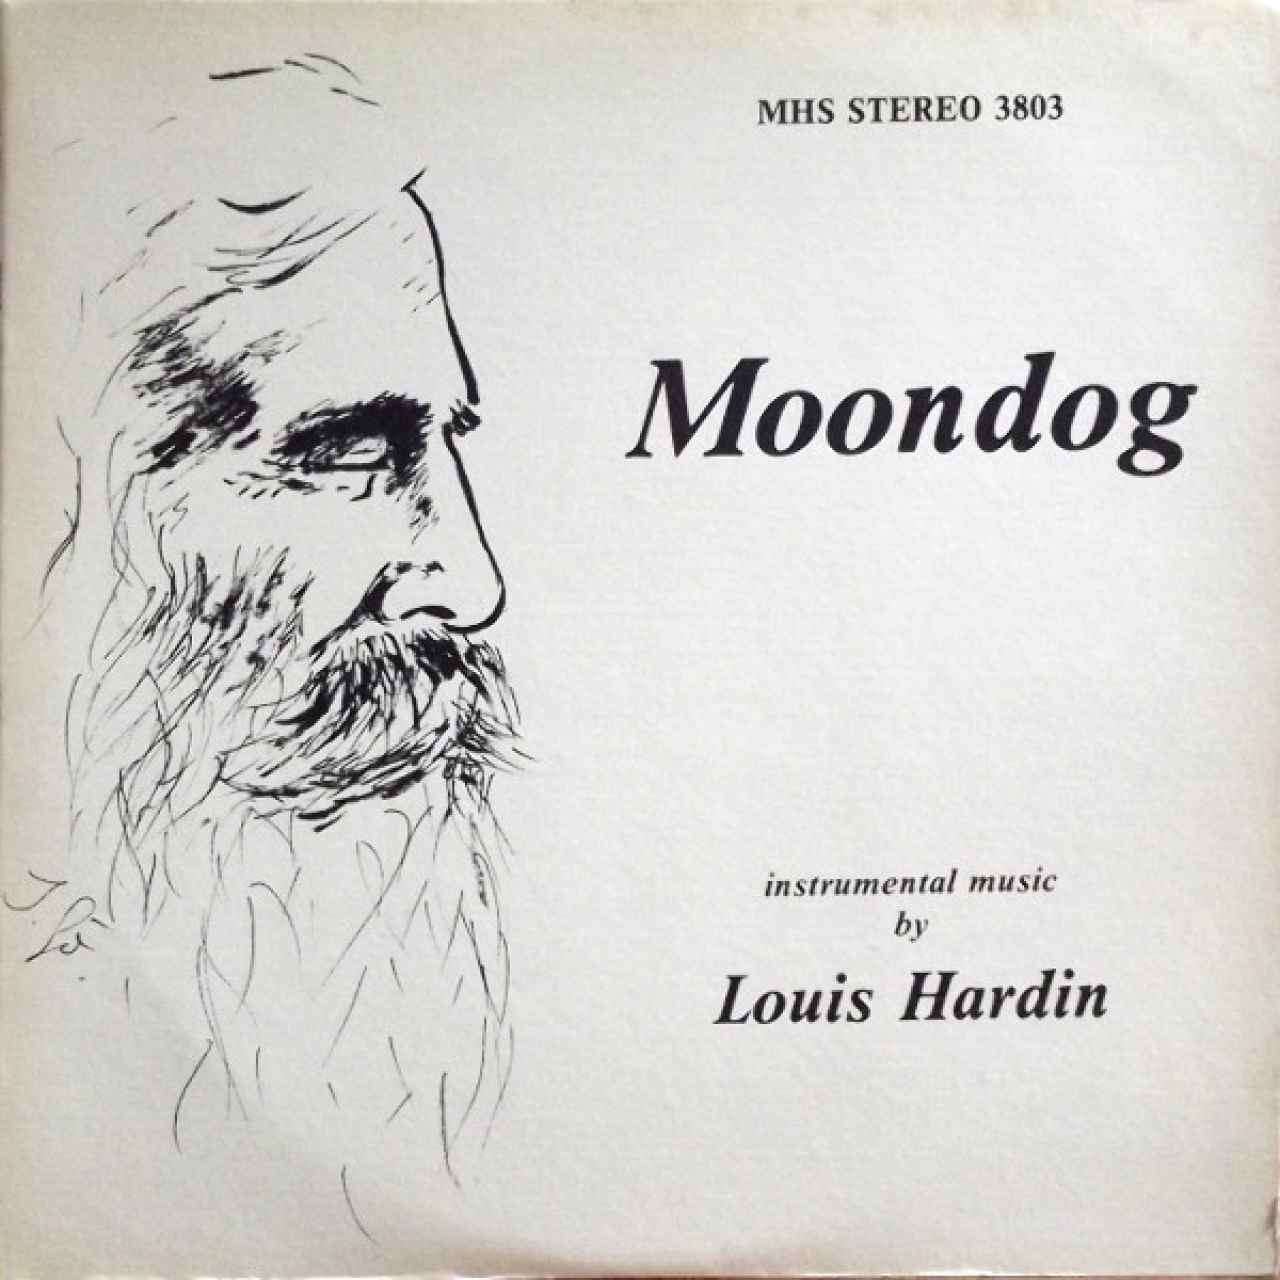 Moondog records